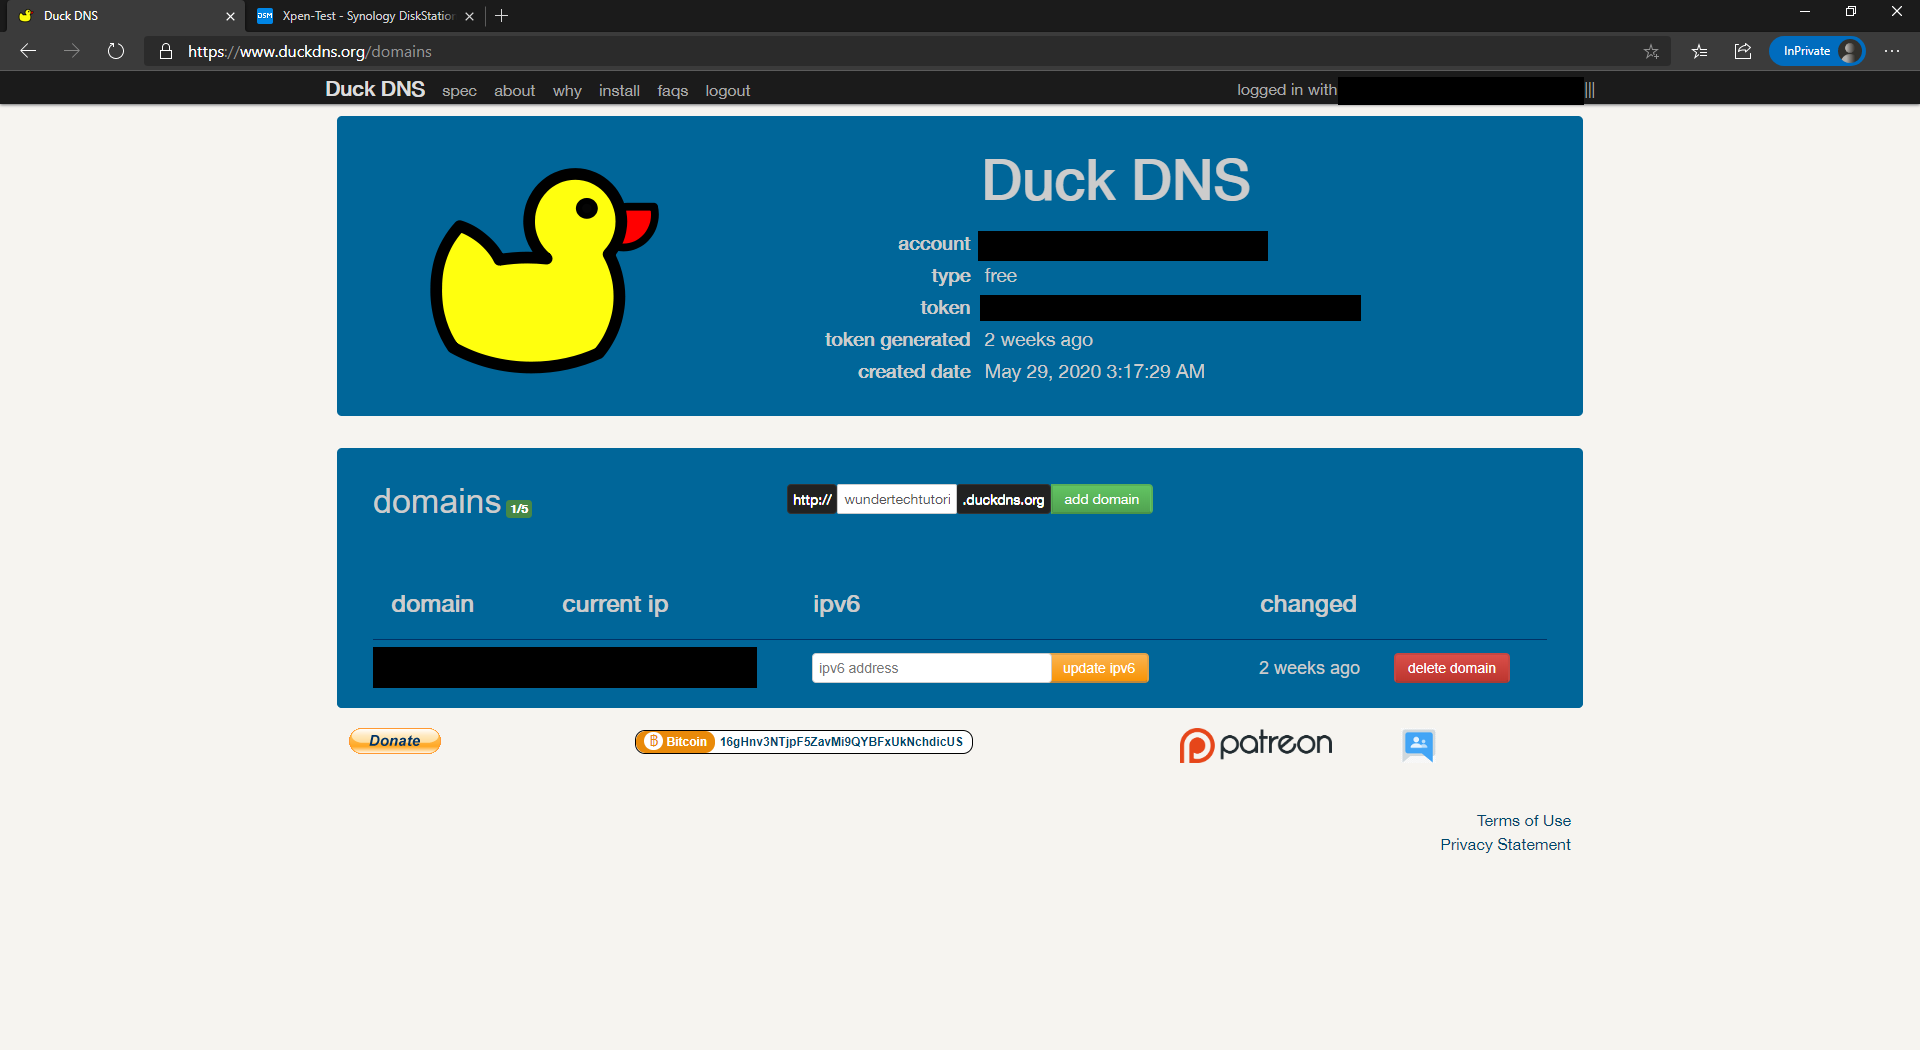 duckdns homepage for ddns setup